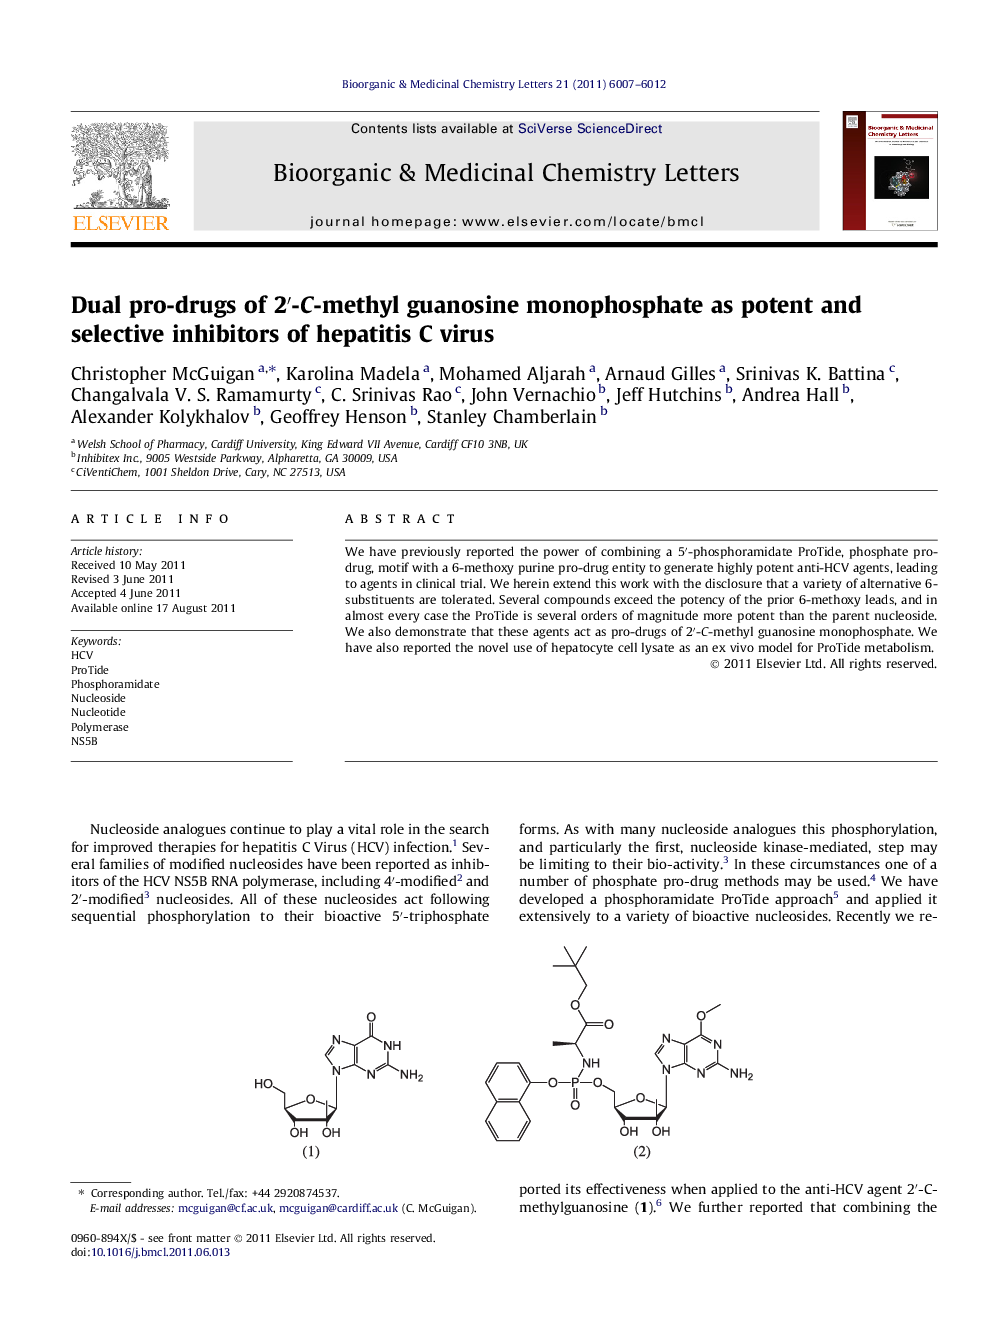 Dual pro-drugs of 2′-C-methyl guanosine monophosphate as potent and selective inhibitors of hepatitis C virus